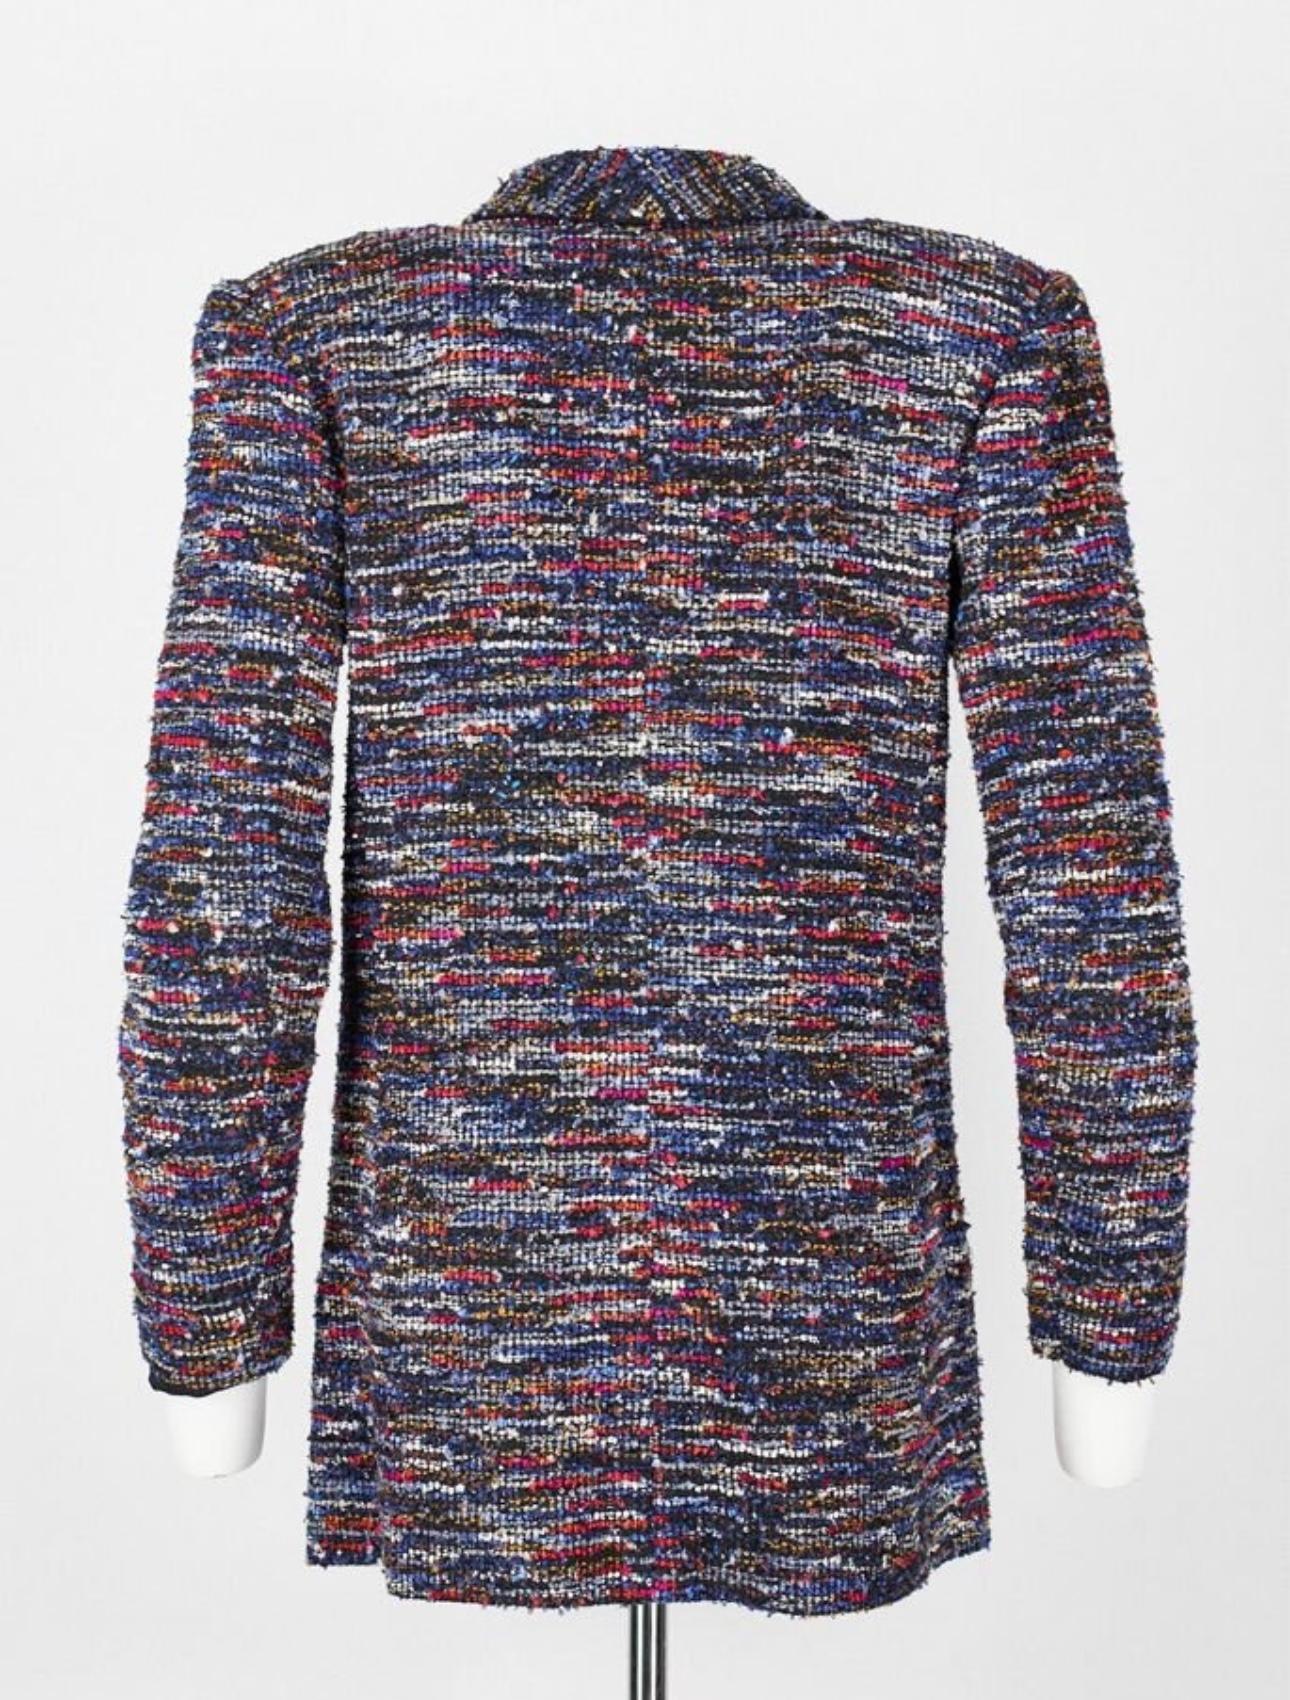 Chanel Cara Delevingne Style Runway Tweed jacket  For Sale 8